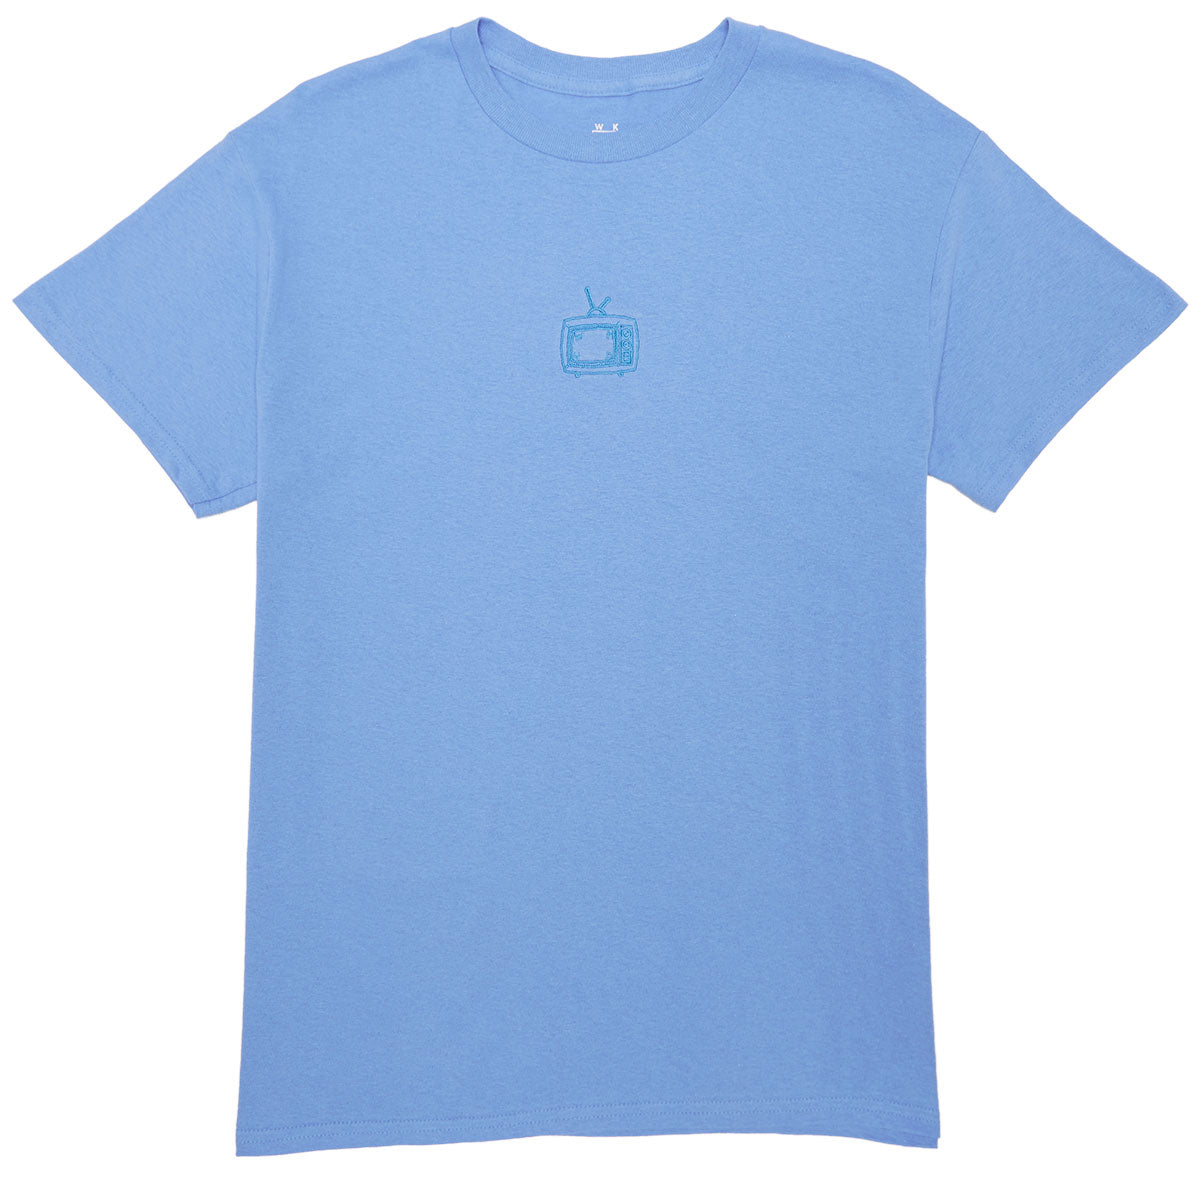 WKND Tv Logo Embroidery T-Shirt - C.Blue image 1